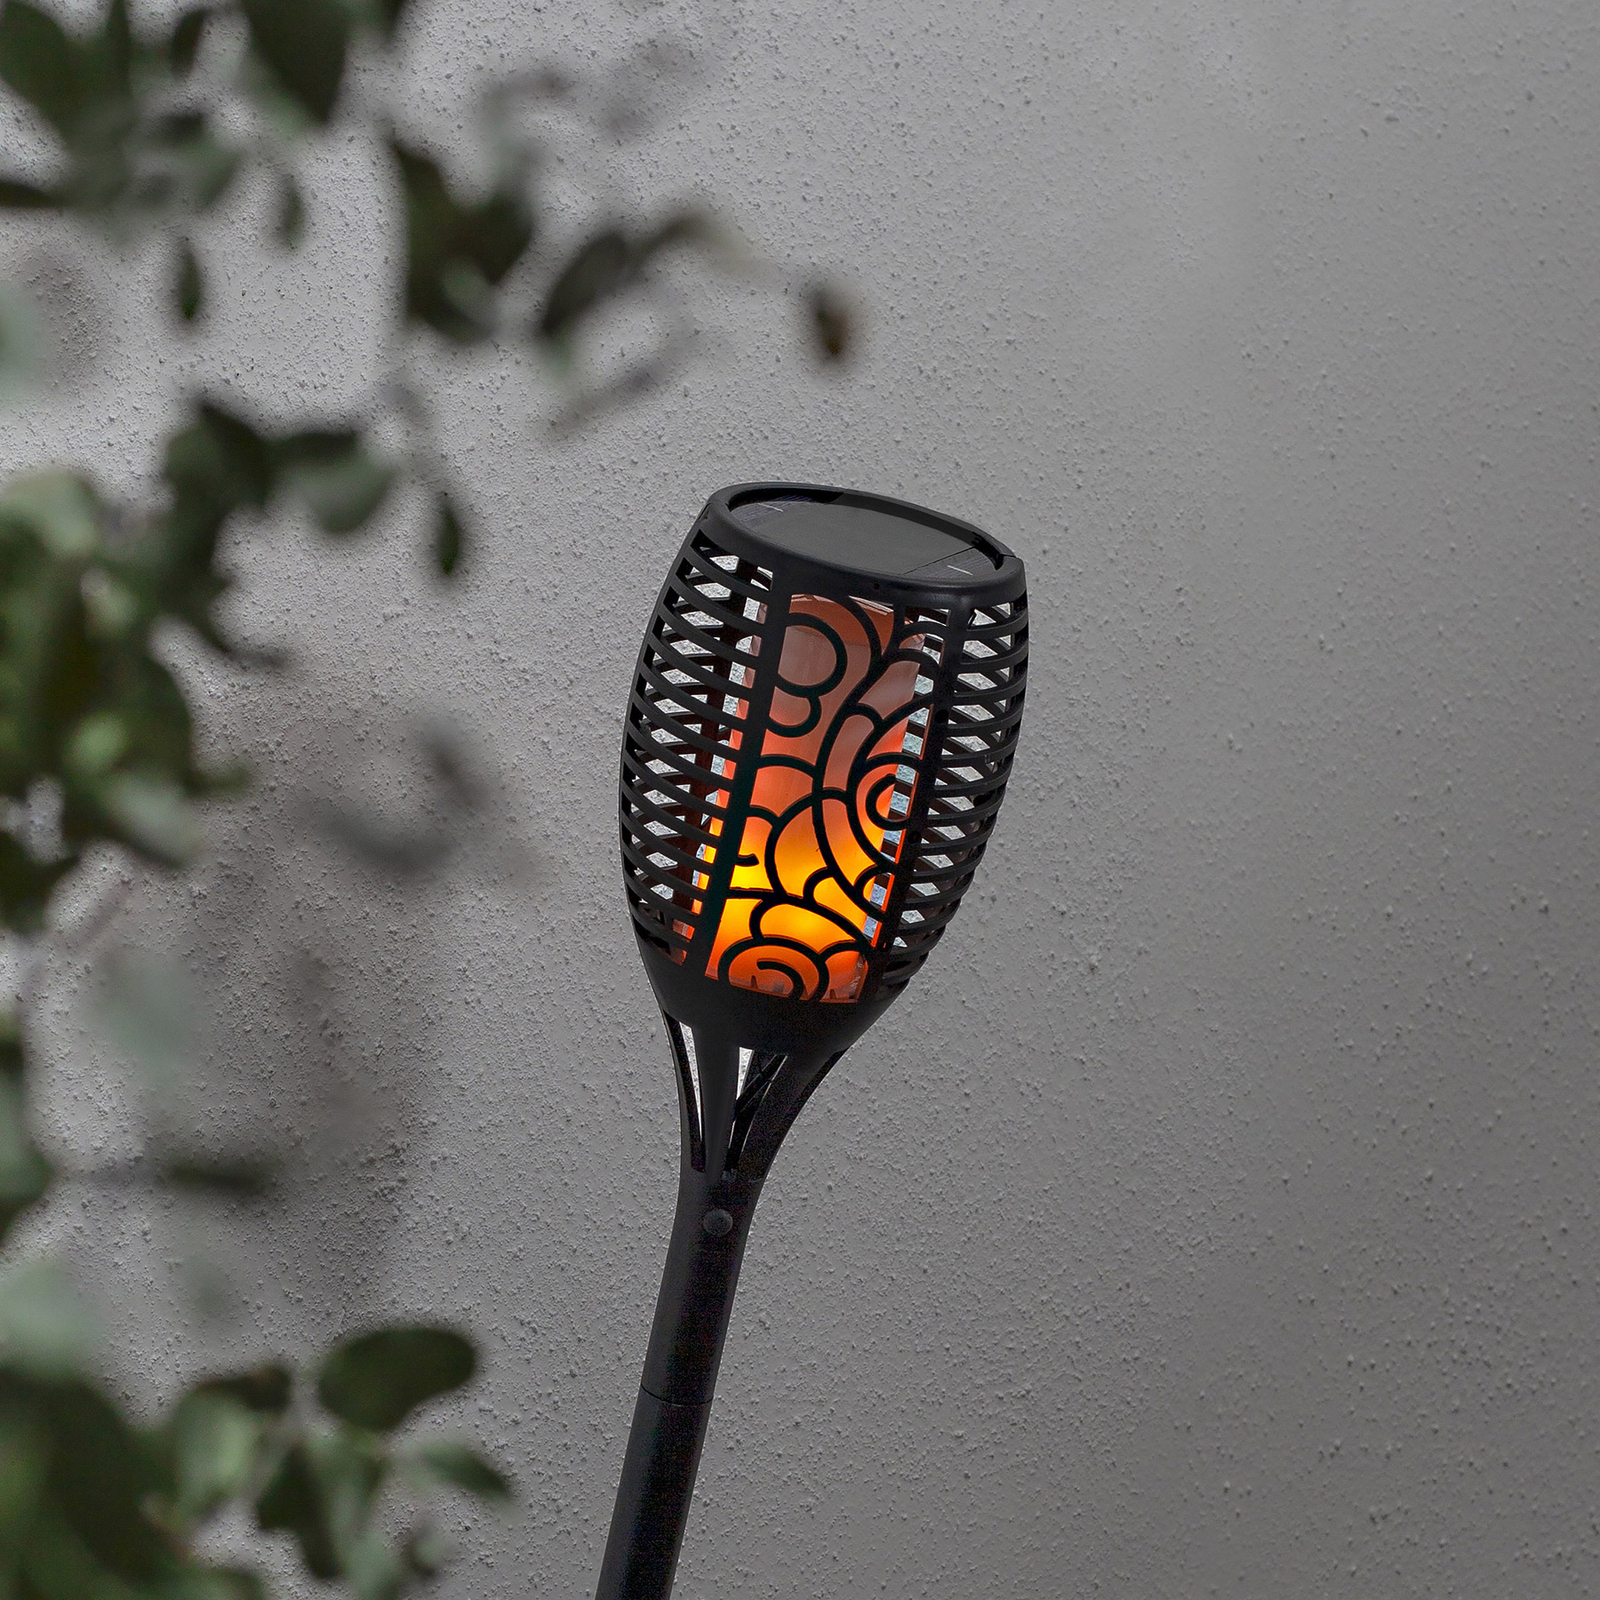 Flame LED lamp op zonne-energie, drie gebruiksmogelijkheden, 54 cm